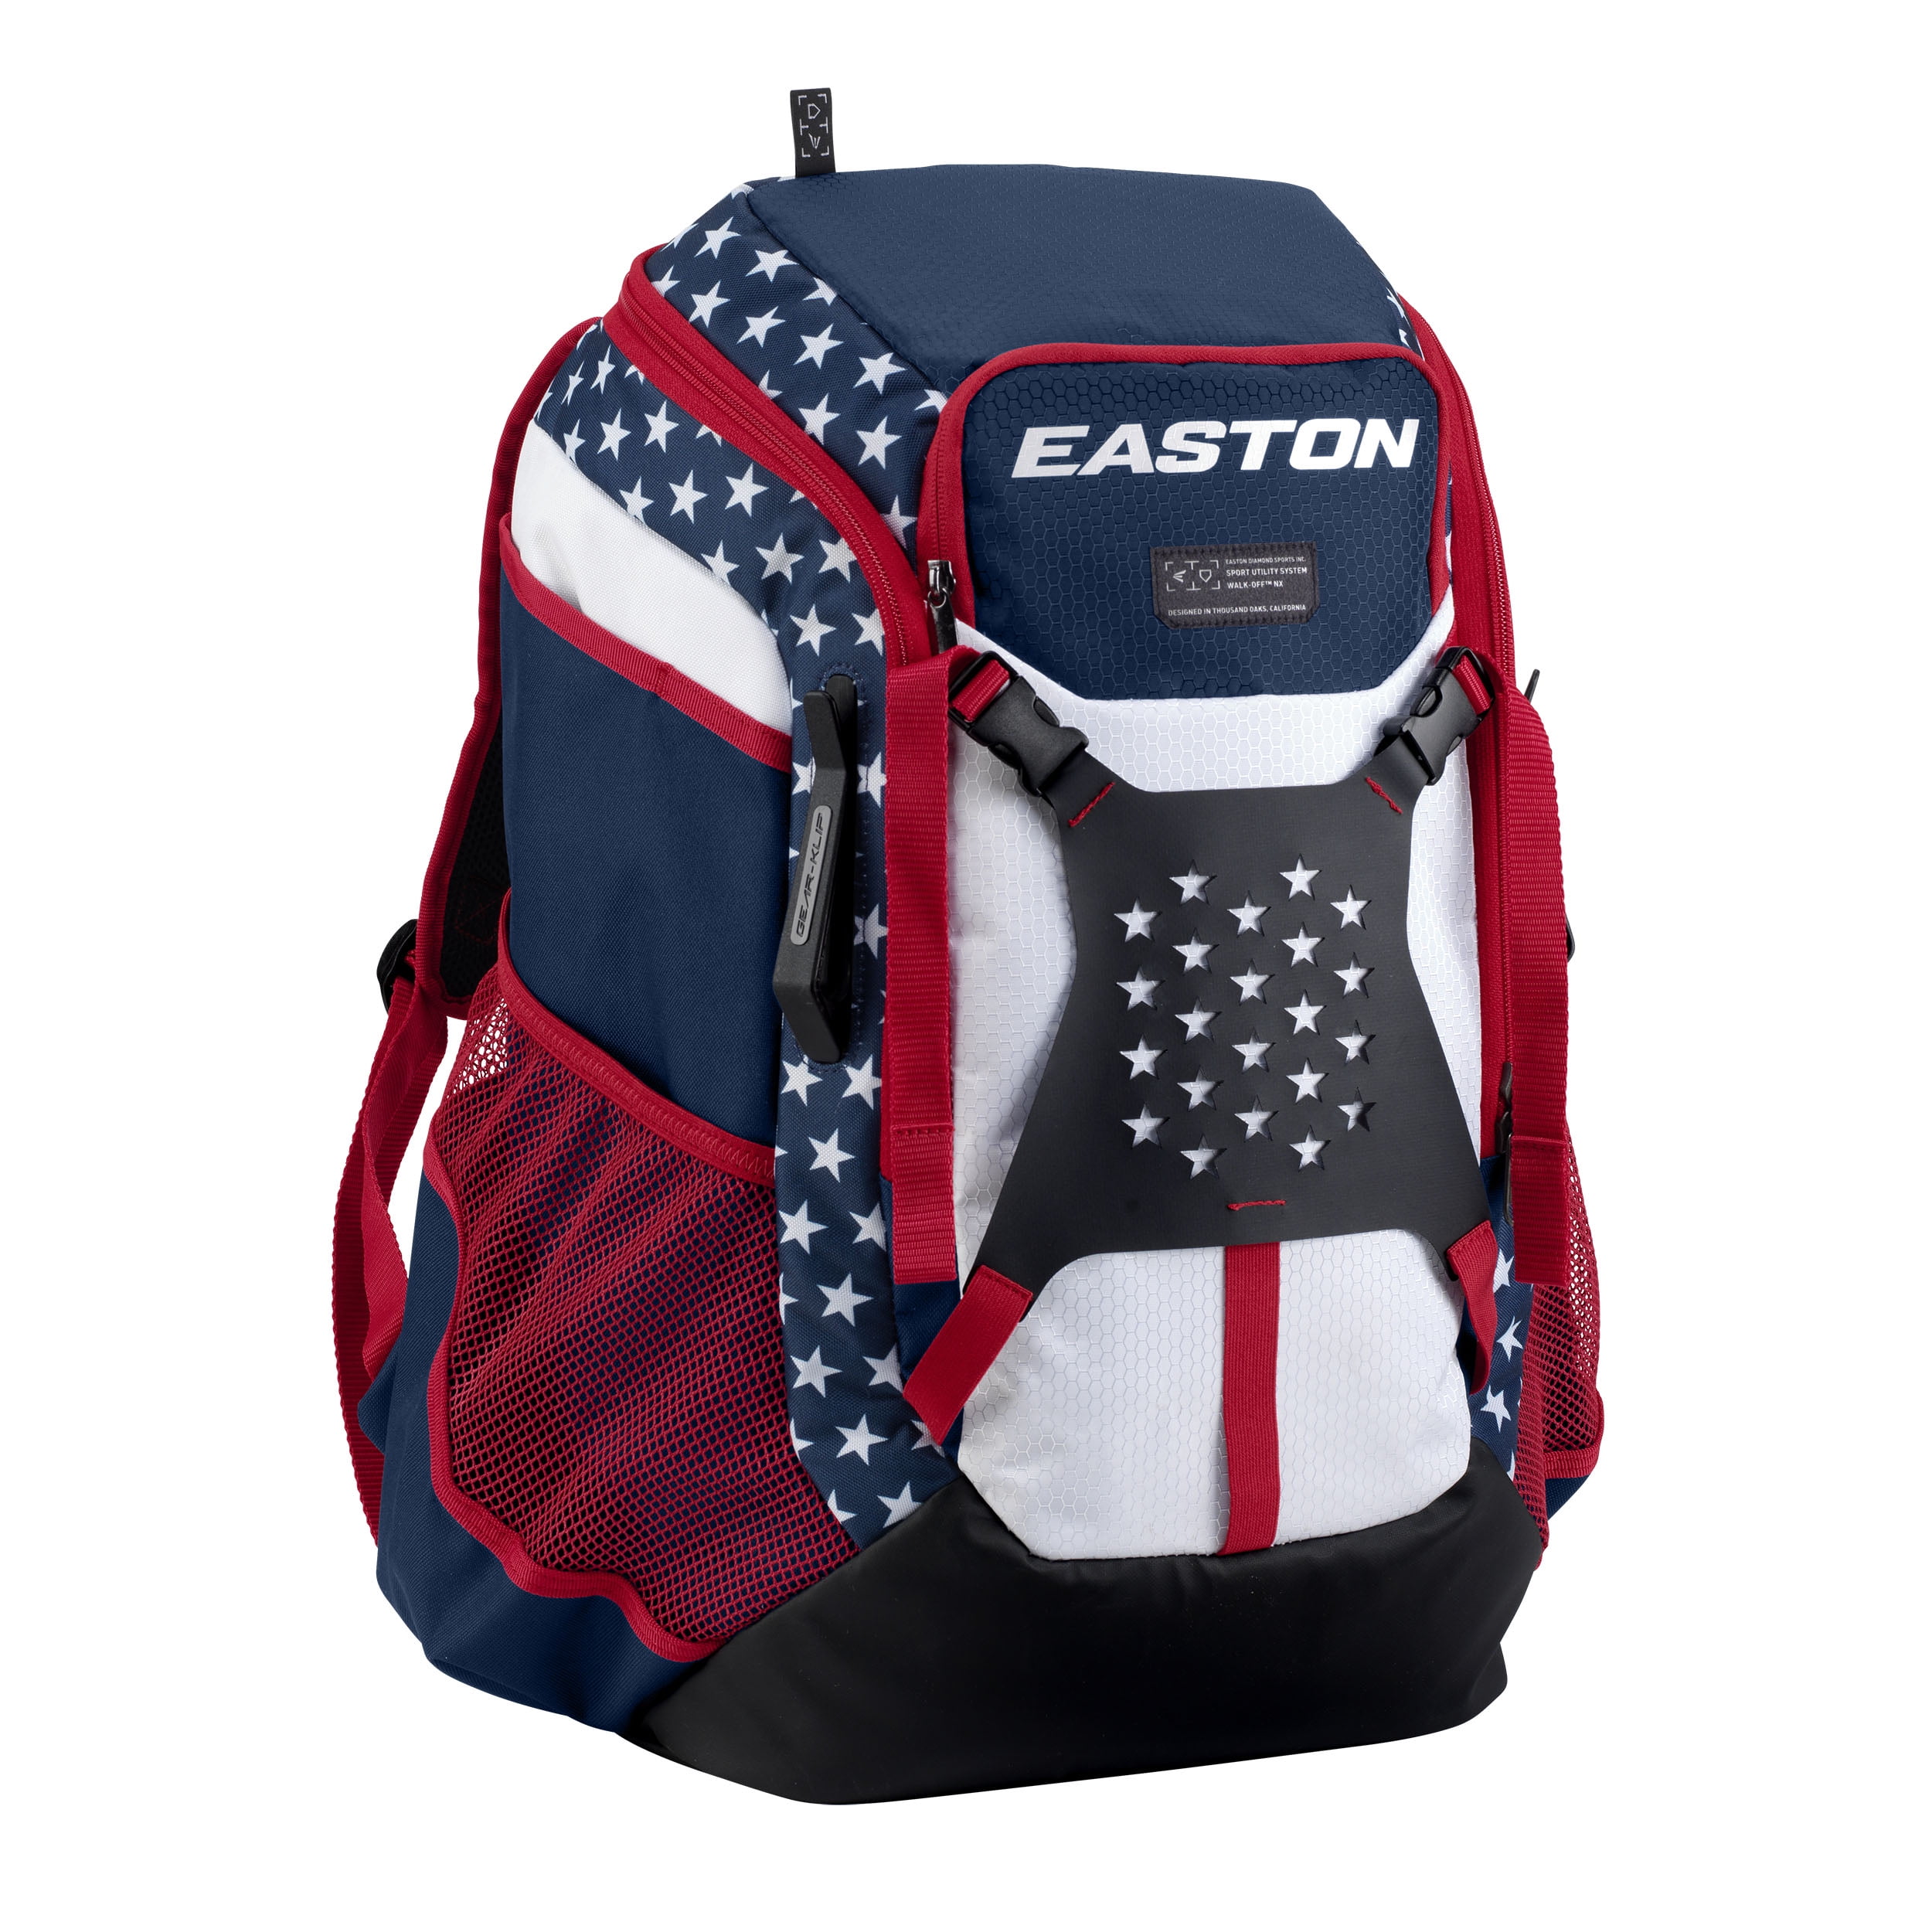 Easton Walk-Off NX Baseball Equipment Backpack Bag, Stars and Stripes